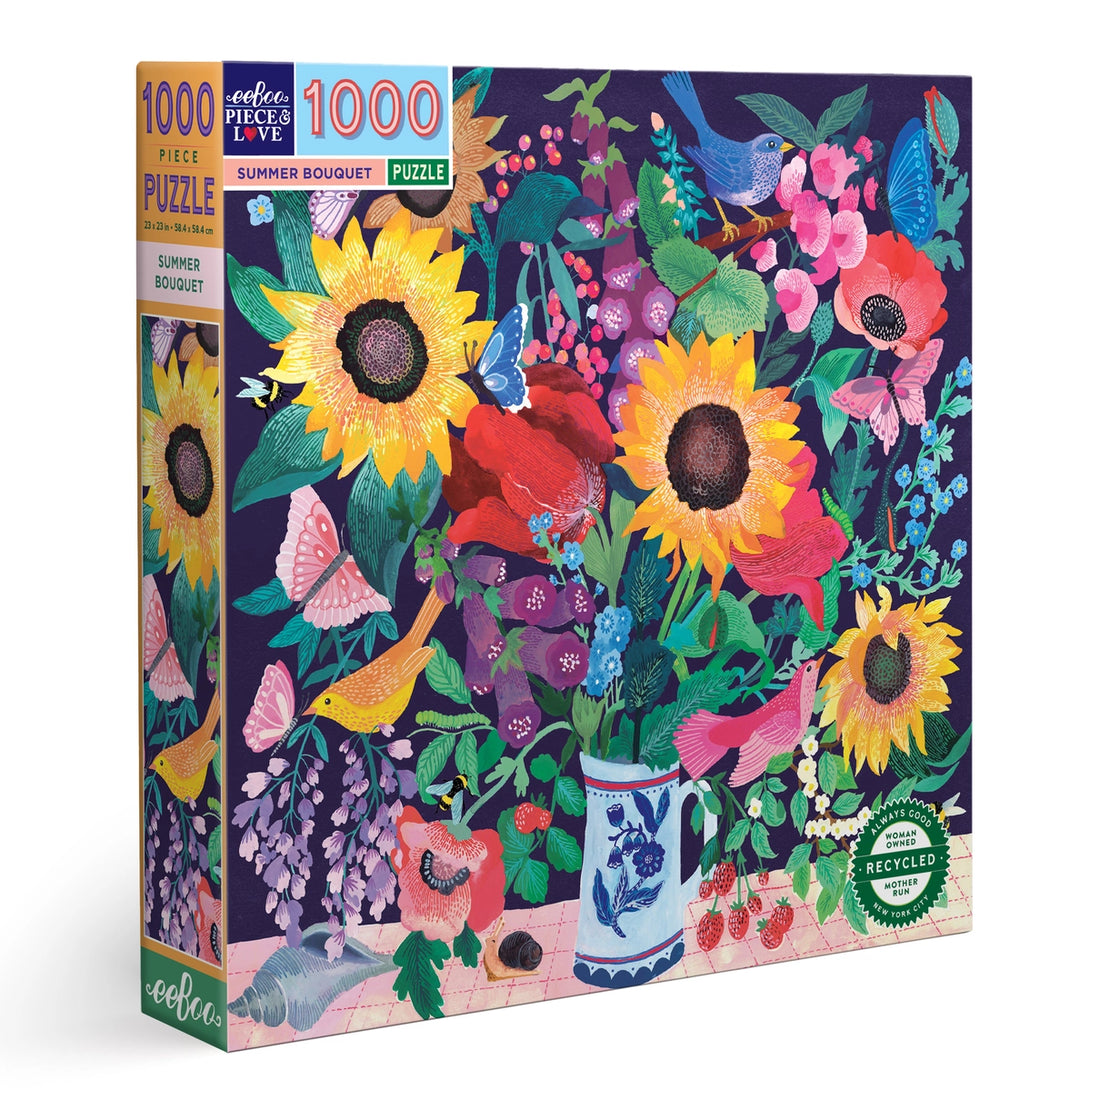 1000 Piece Birds and Botanical Puzzles